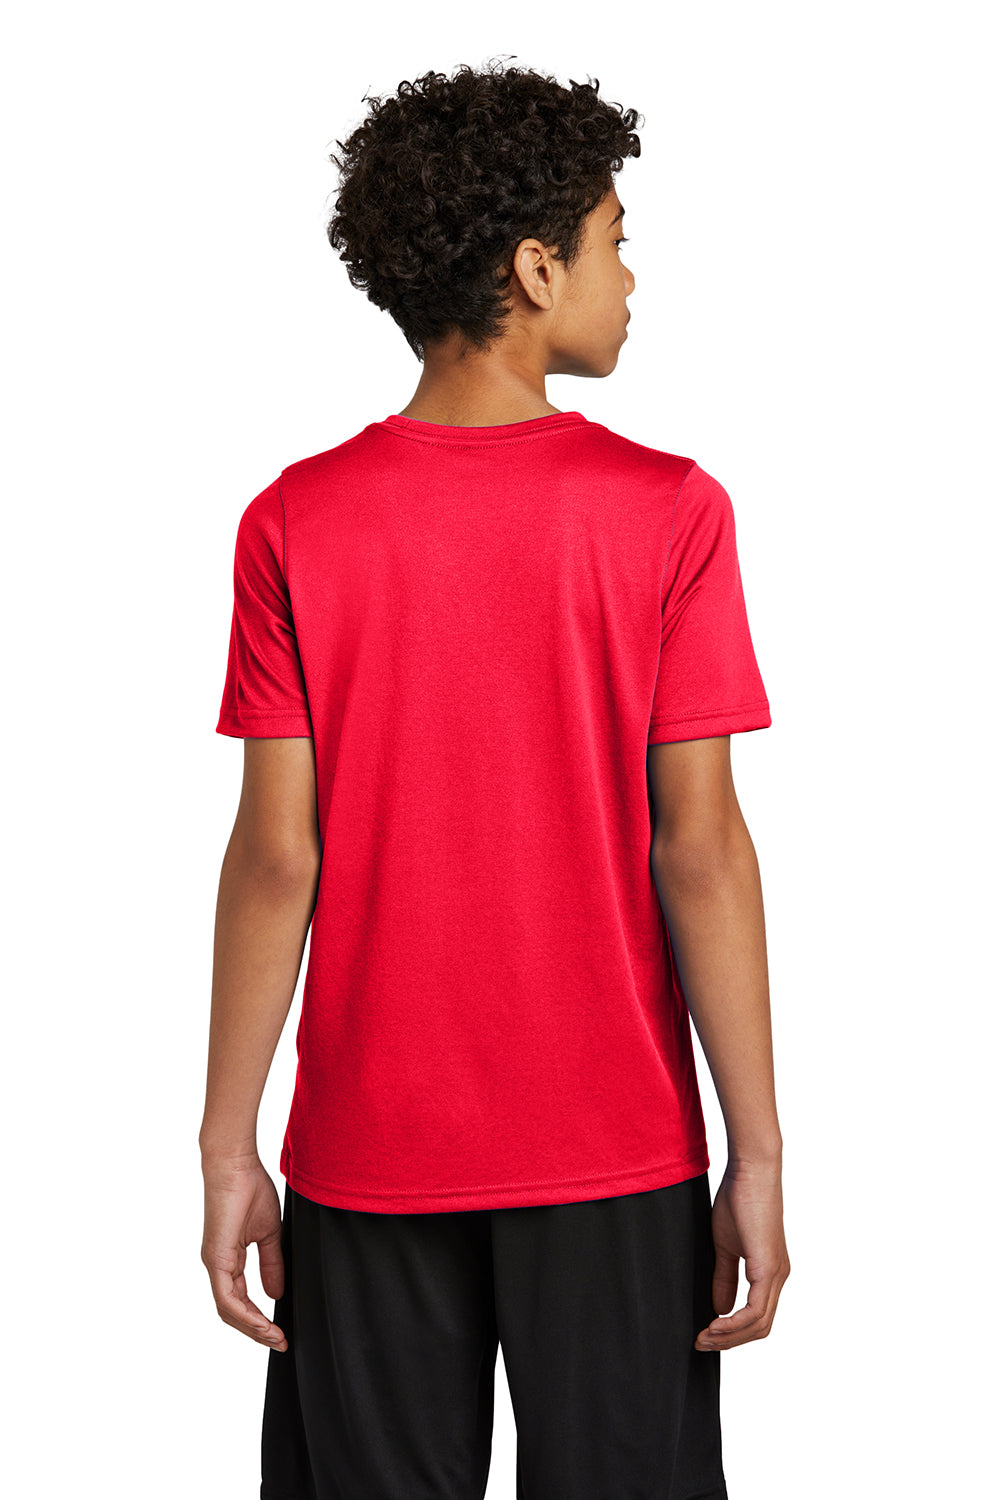 Nike NKDX8787 Youth rLegend Dri-Fit Moisture Wicking Short Sleeve Crewneck T-Shirt University Red Model Back